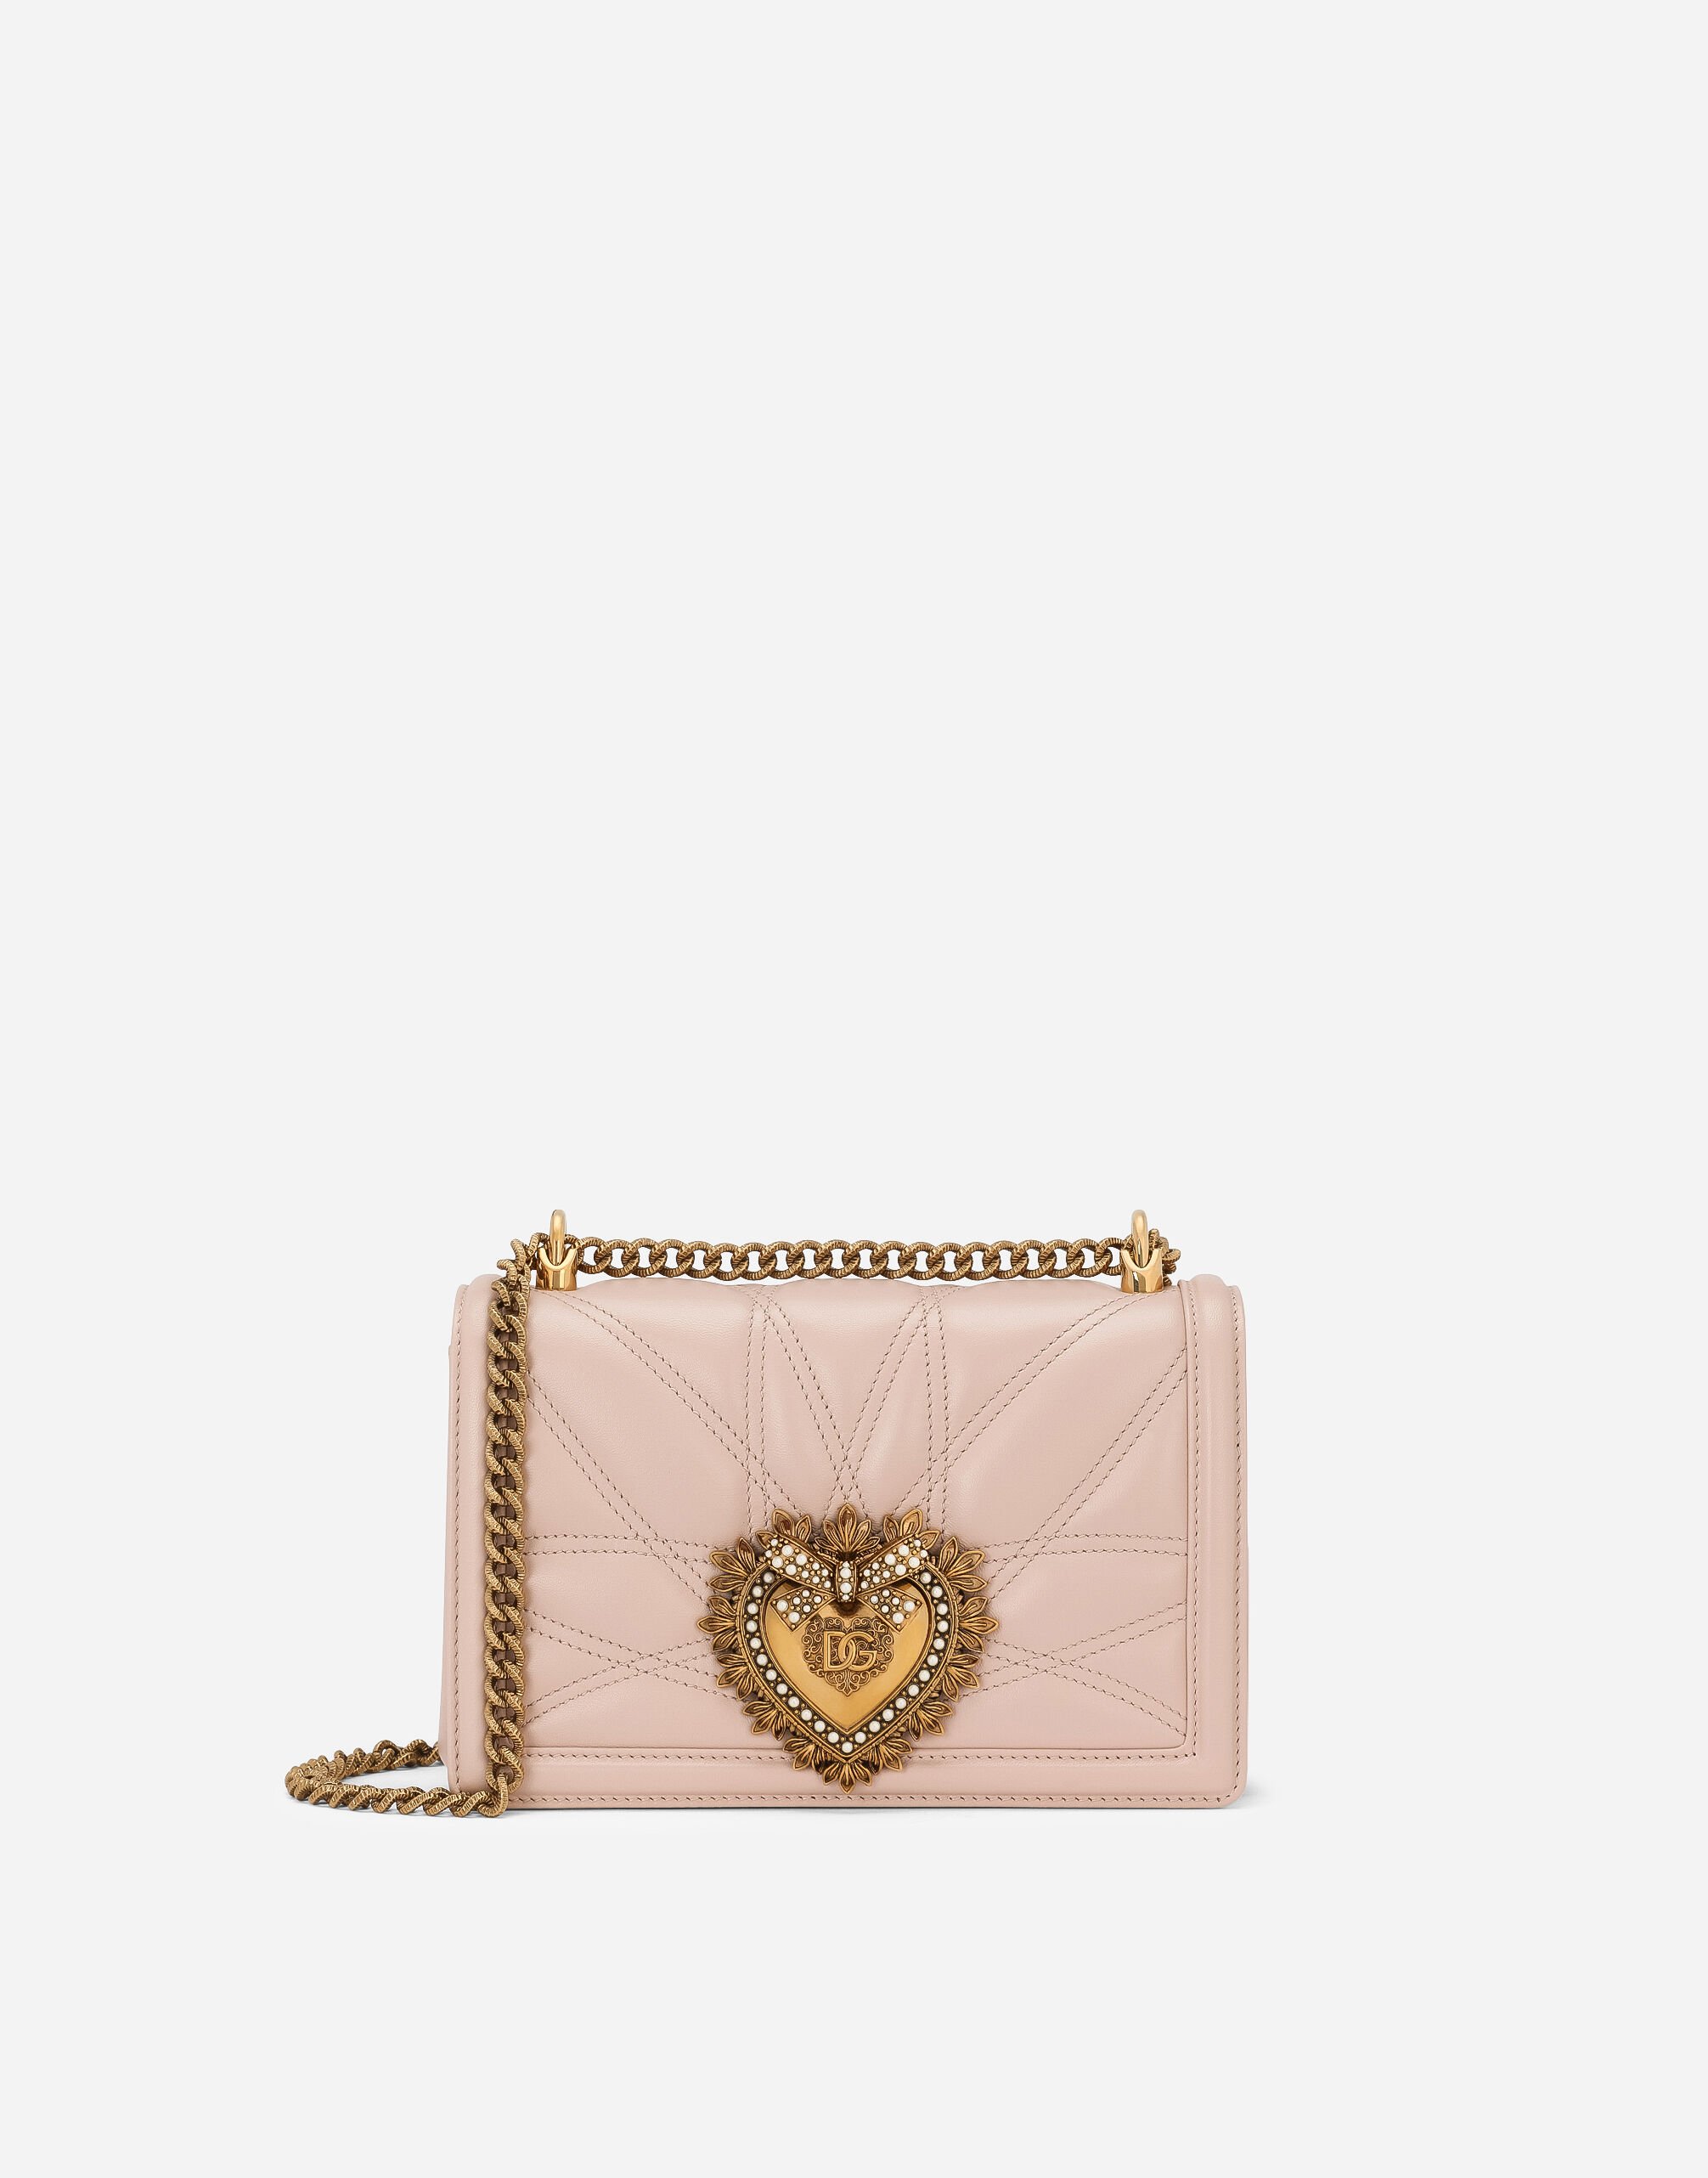 Devotion Bags for Women | Bags whit heart | Dolce&Gabbana®